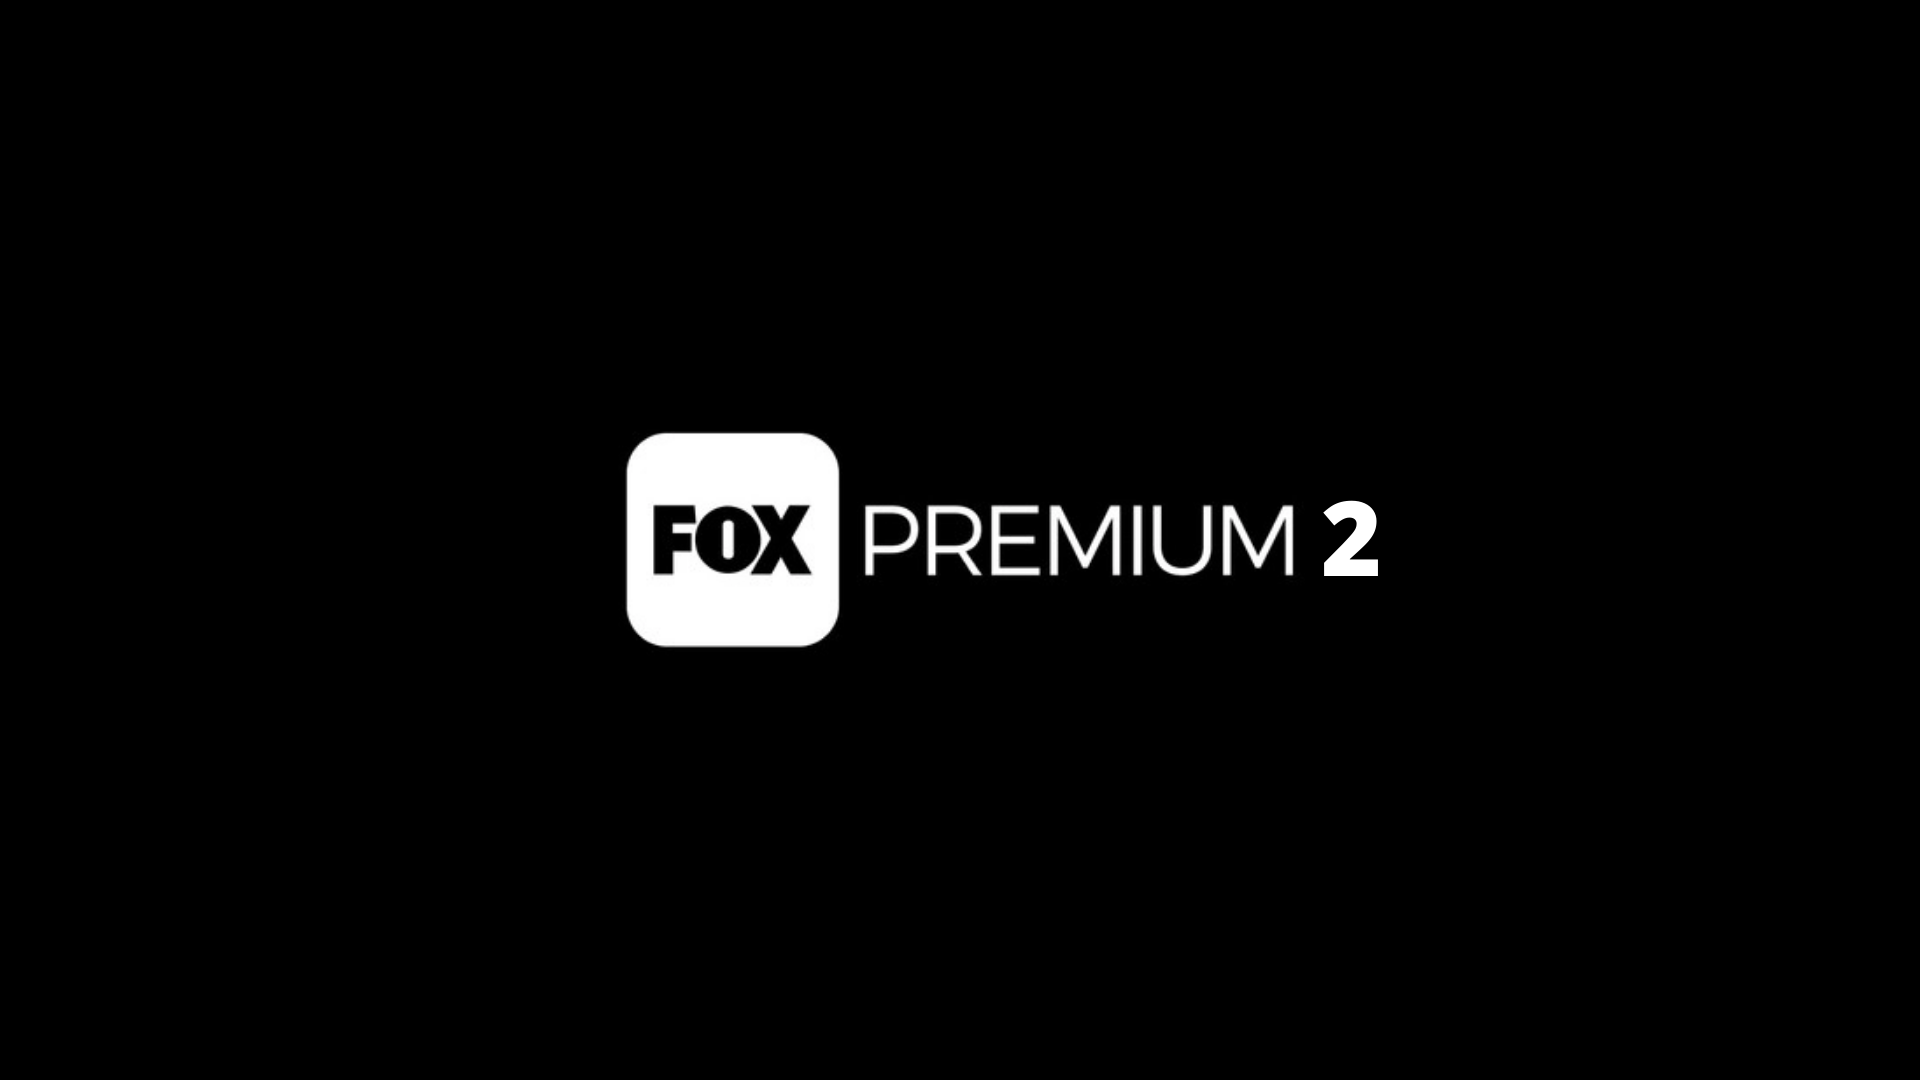 Fox Premium 2 ao vivo,Fox Premium 2 online,assistir Fox Premium 2,assistir Fox Premium 2 ao vivo,assistir Fox Premium 2 online,Fox Premium 2 gratis,assistir Fox Premium 2 gratis,ao vivo online,ao vivo gratis,ver Fox Premium 2,ver Fox Premium 2 ao vivo,ver Fox Premium 2 online,24 horas,24h,multicanais,piratetv,piratatvs.com